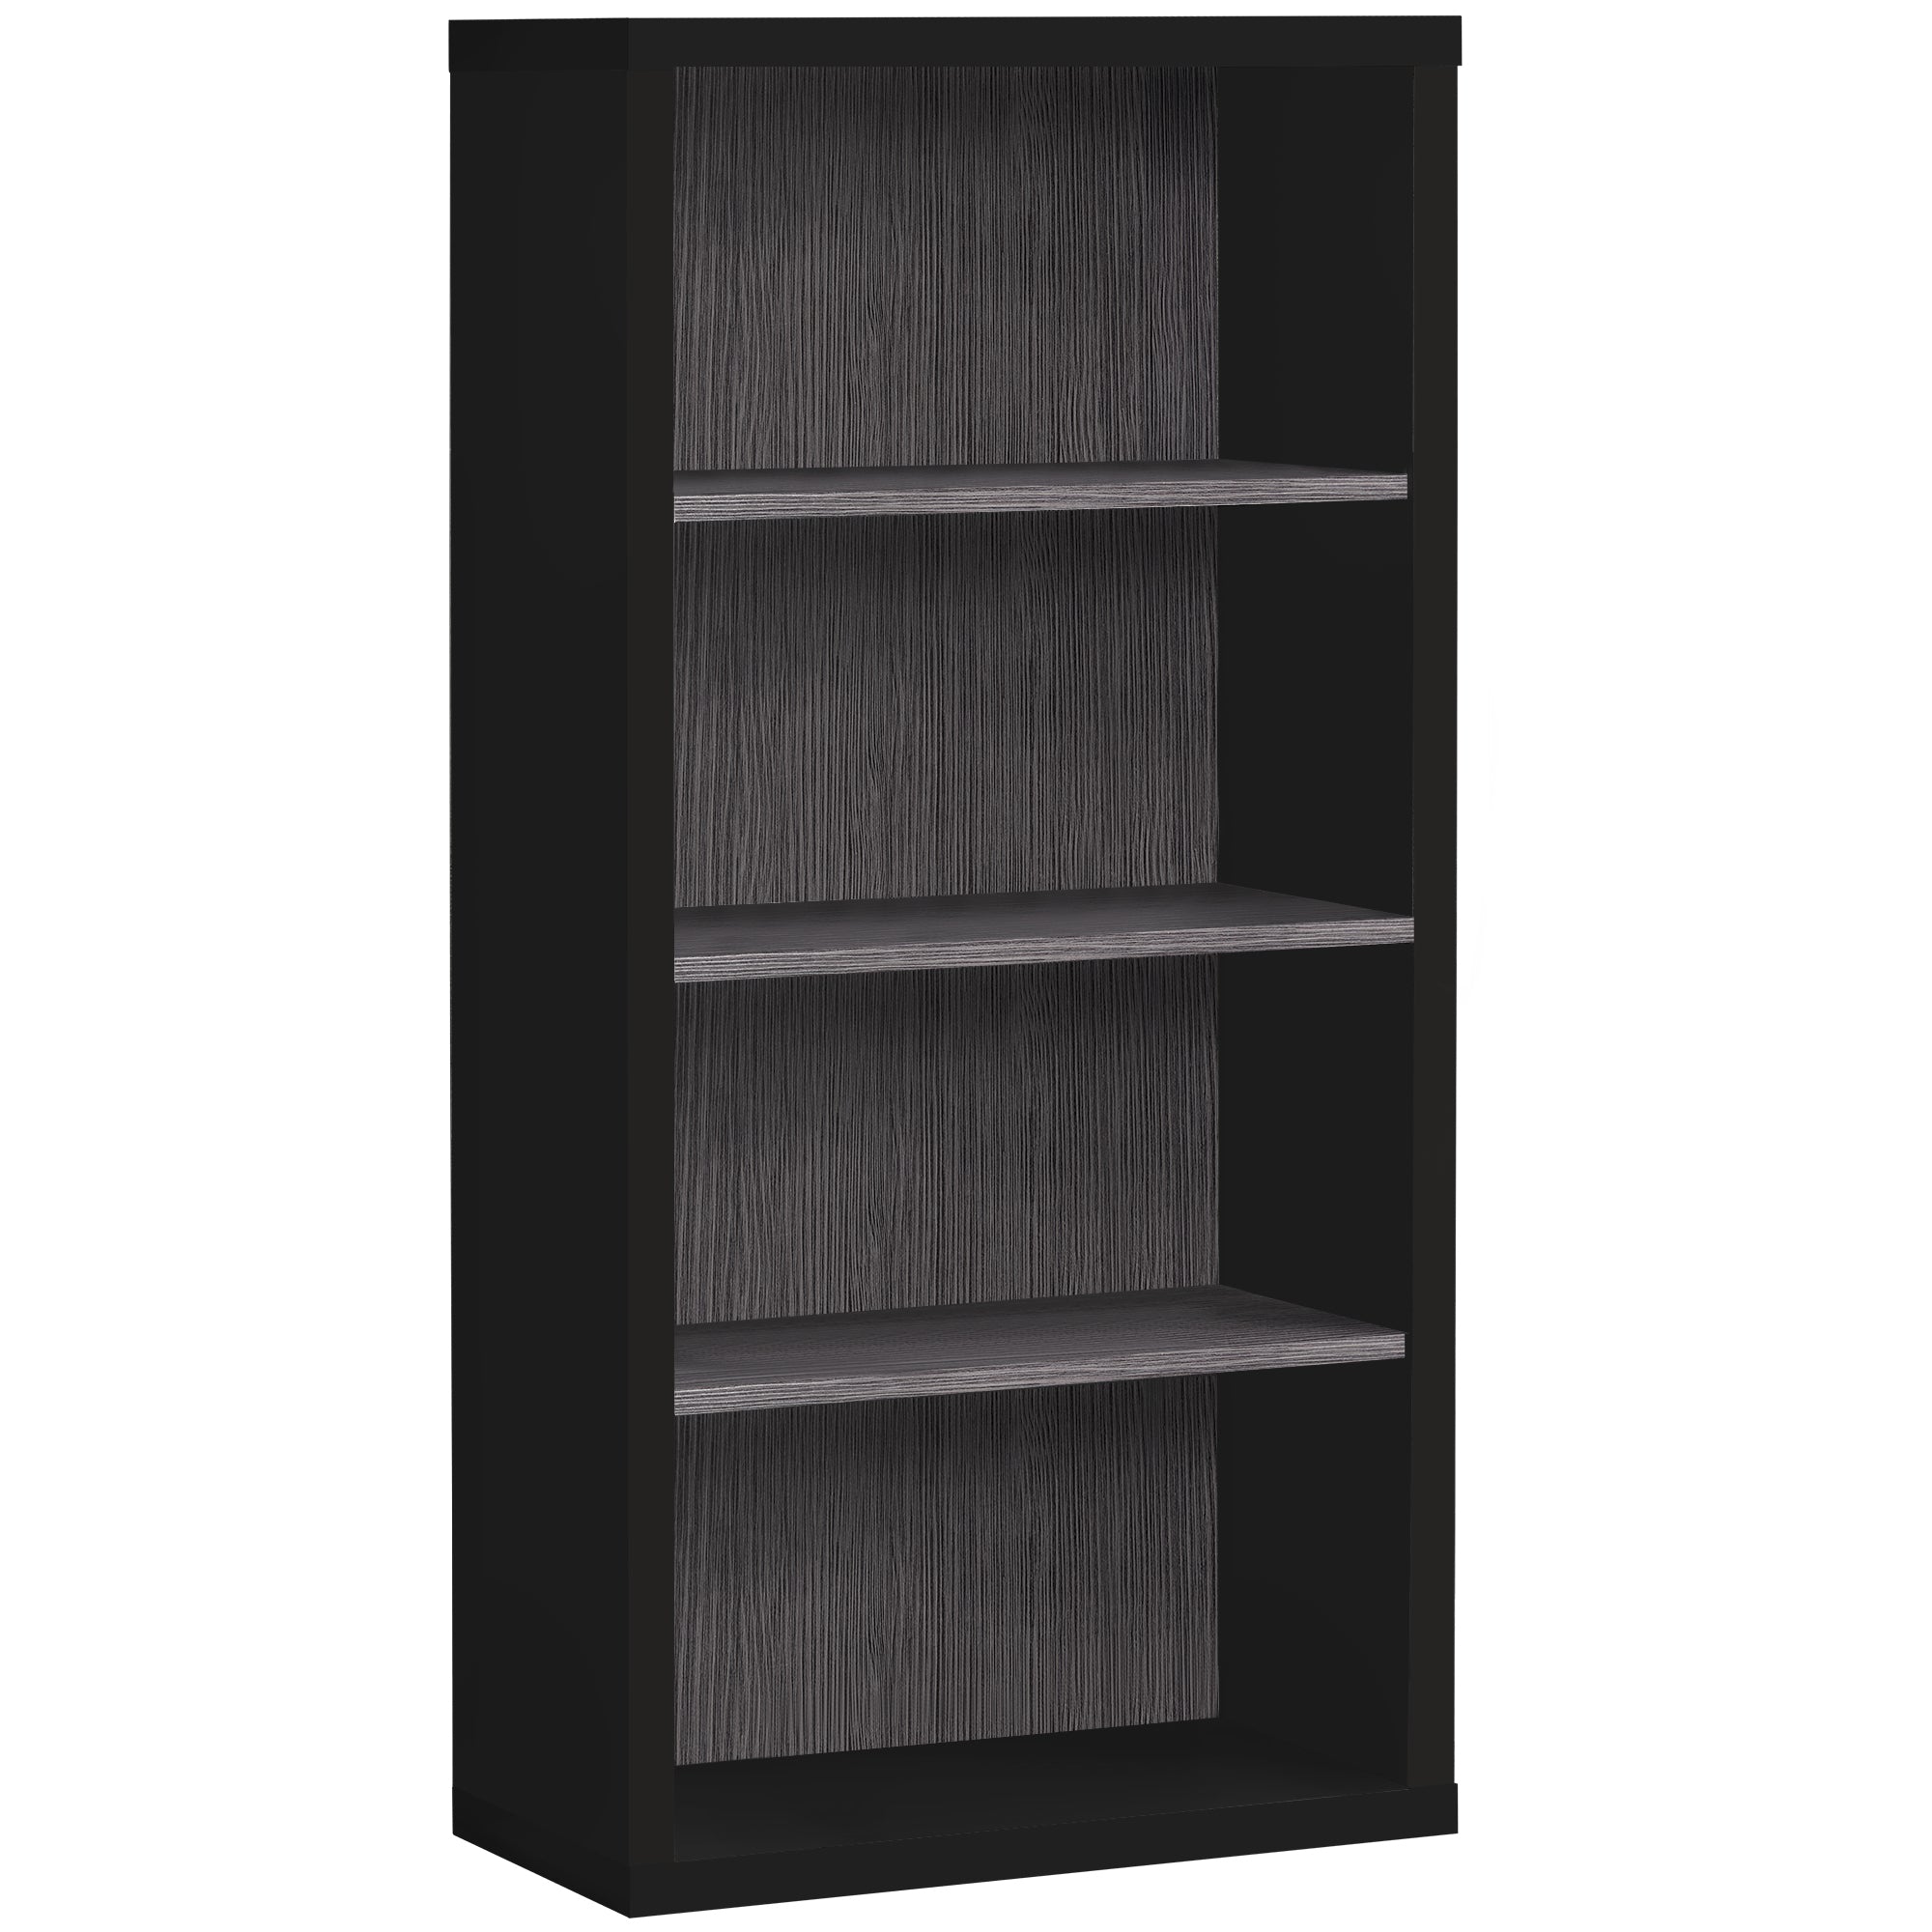 MN-737407    Bookshelf, Bookcase, Etagere, 5 Tier, Office, Bedroom, 48"H, Laminate, Black, Grey, Contemporary, Modern